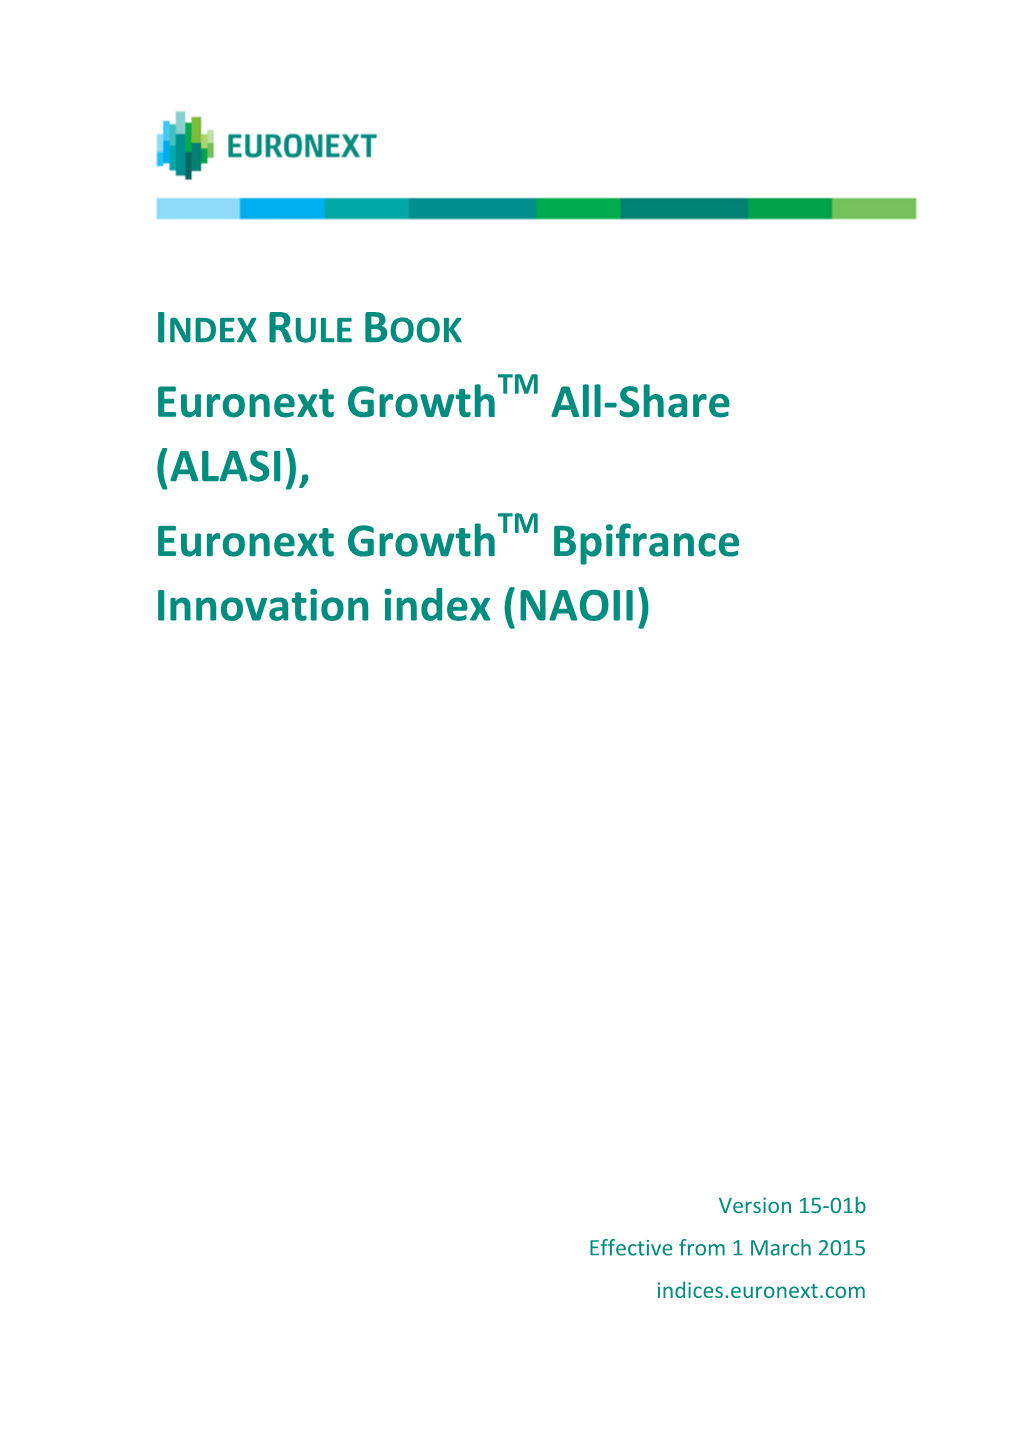 Euronext Growth Bpifrance Innovation Index (NAOII)